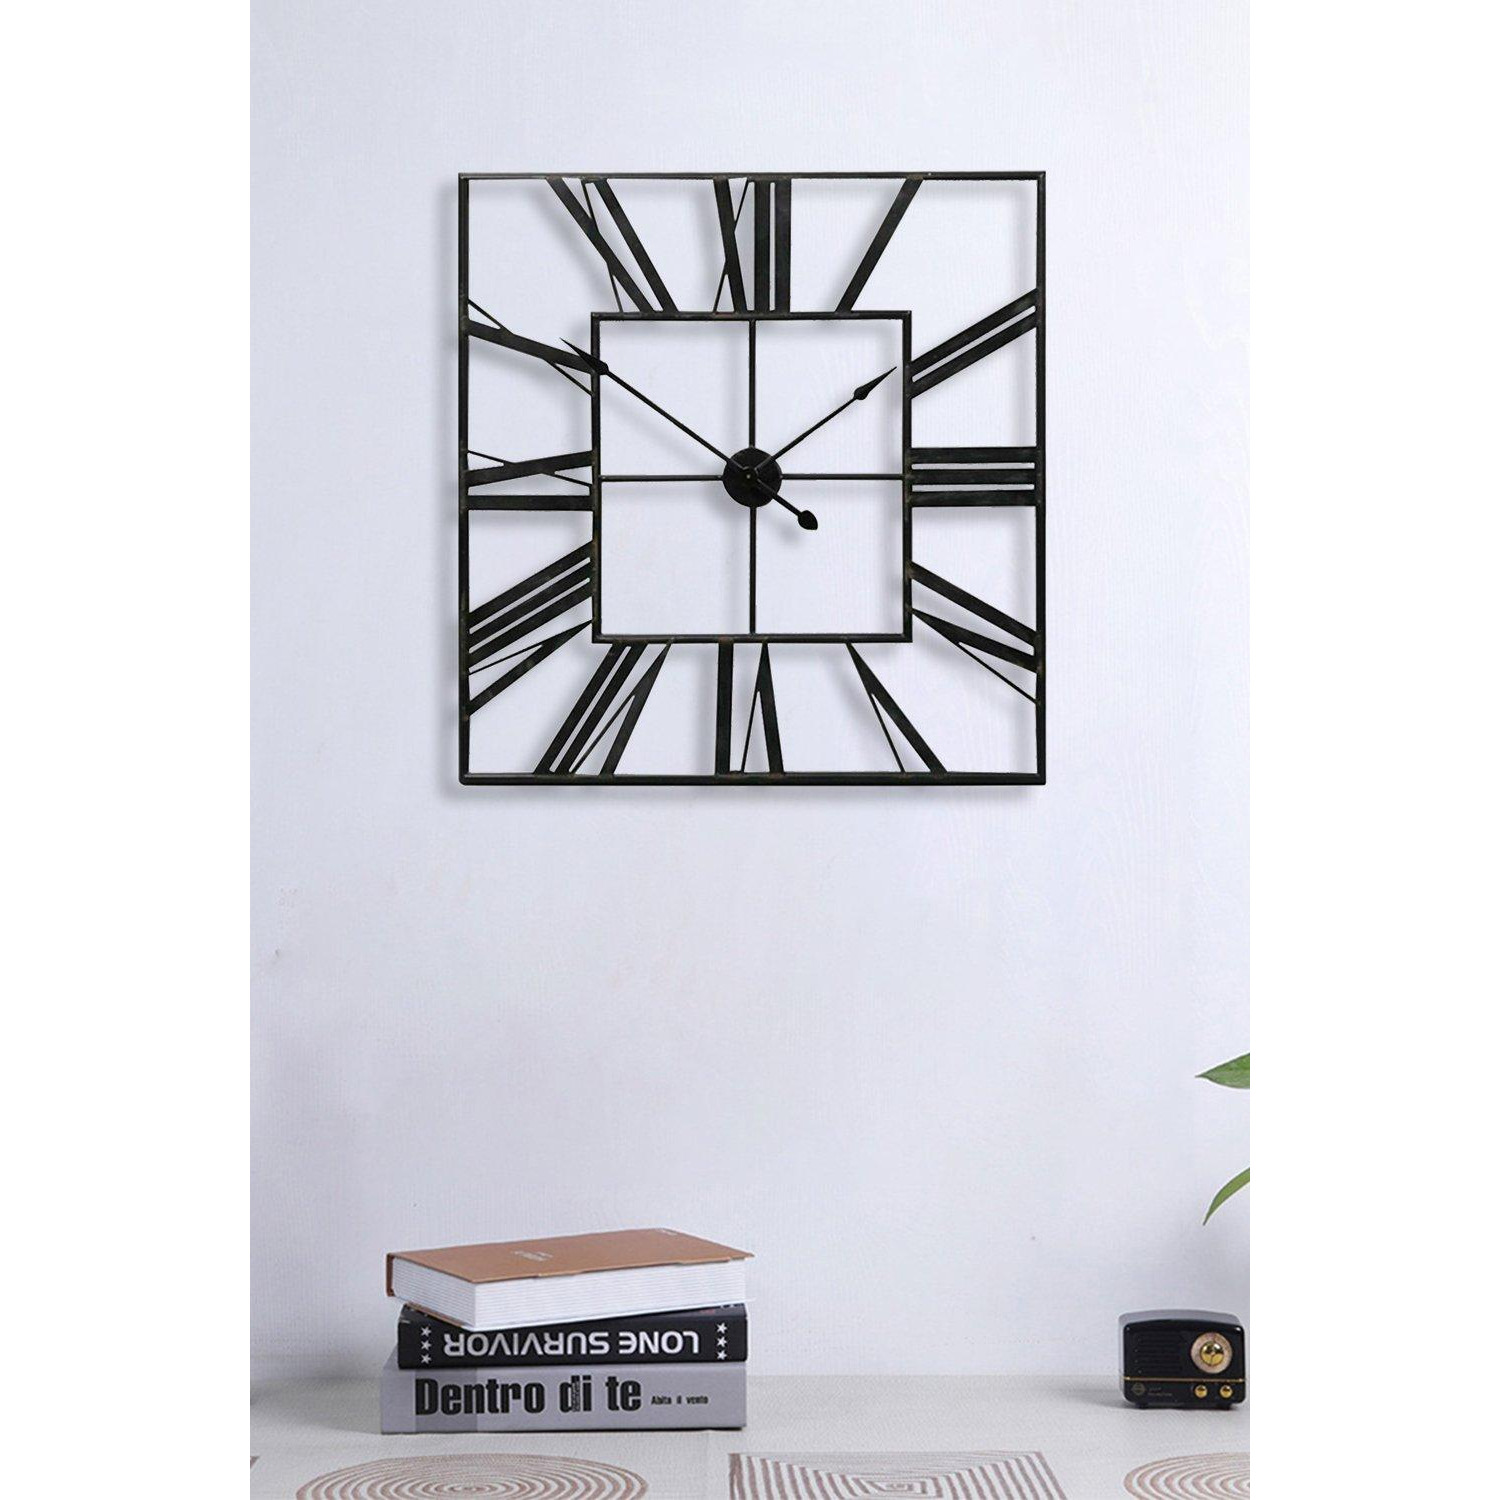 60cm Square Roman Numeral Skeleton Metal Wall Clock - image 1